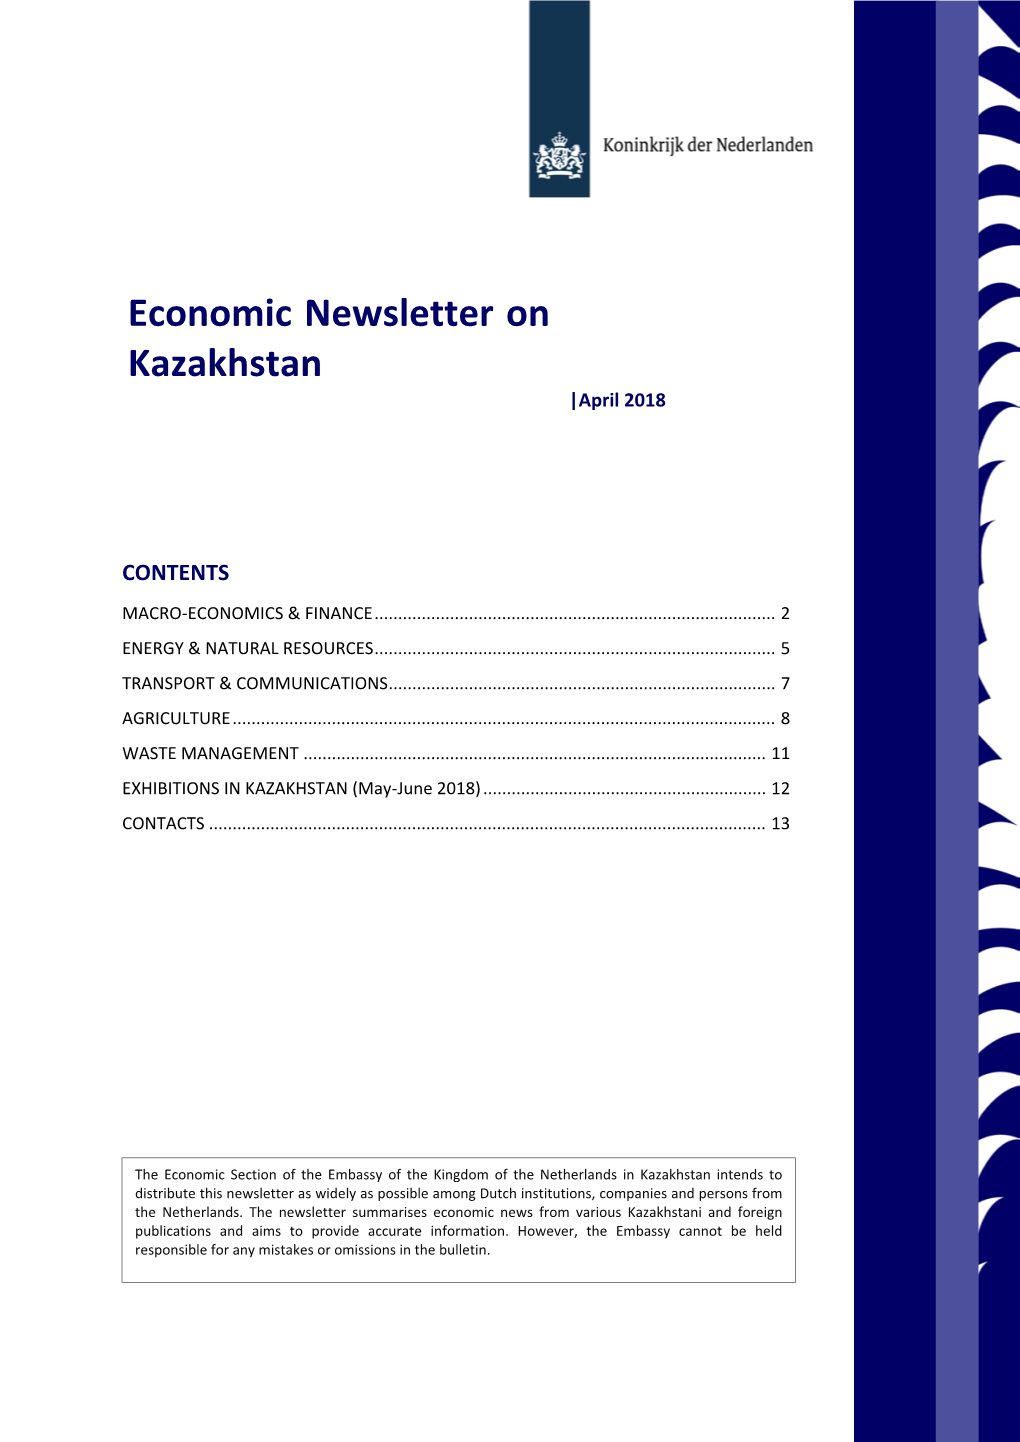 Economic Newsletter on Kazakhstan |April 2018